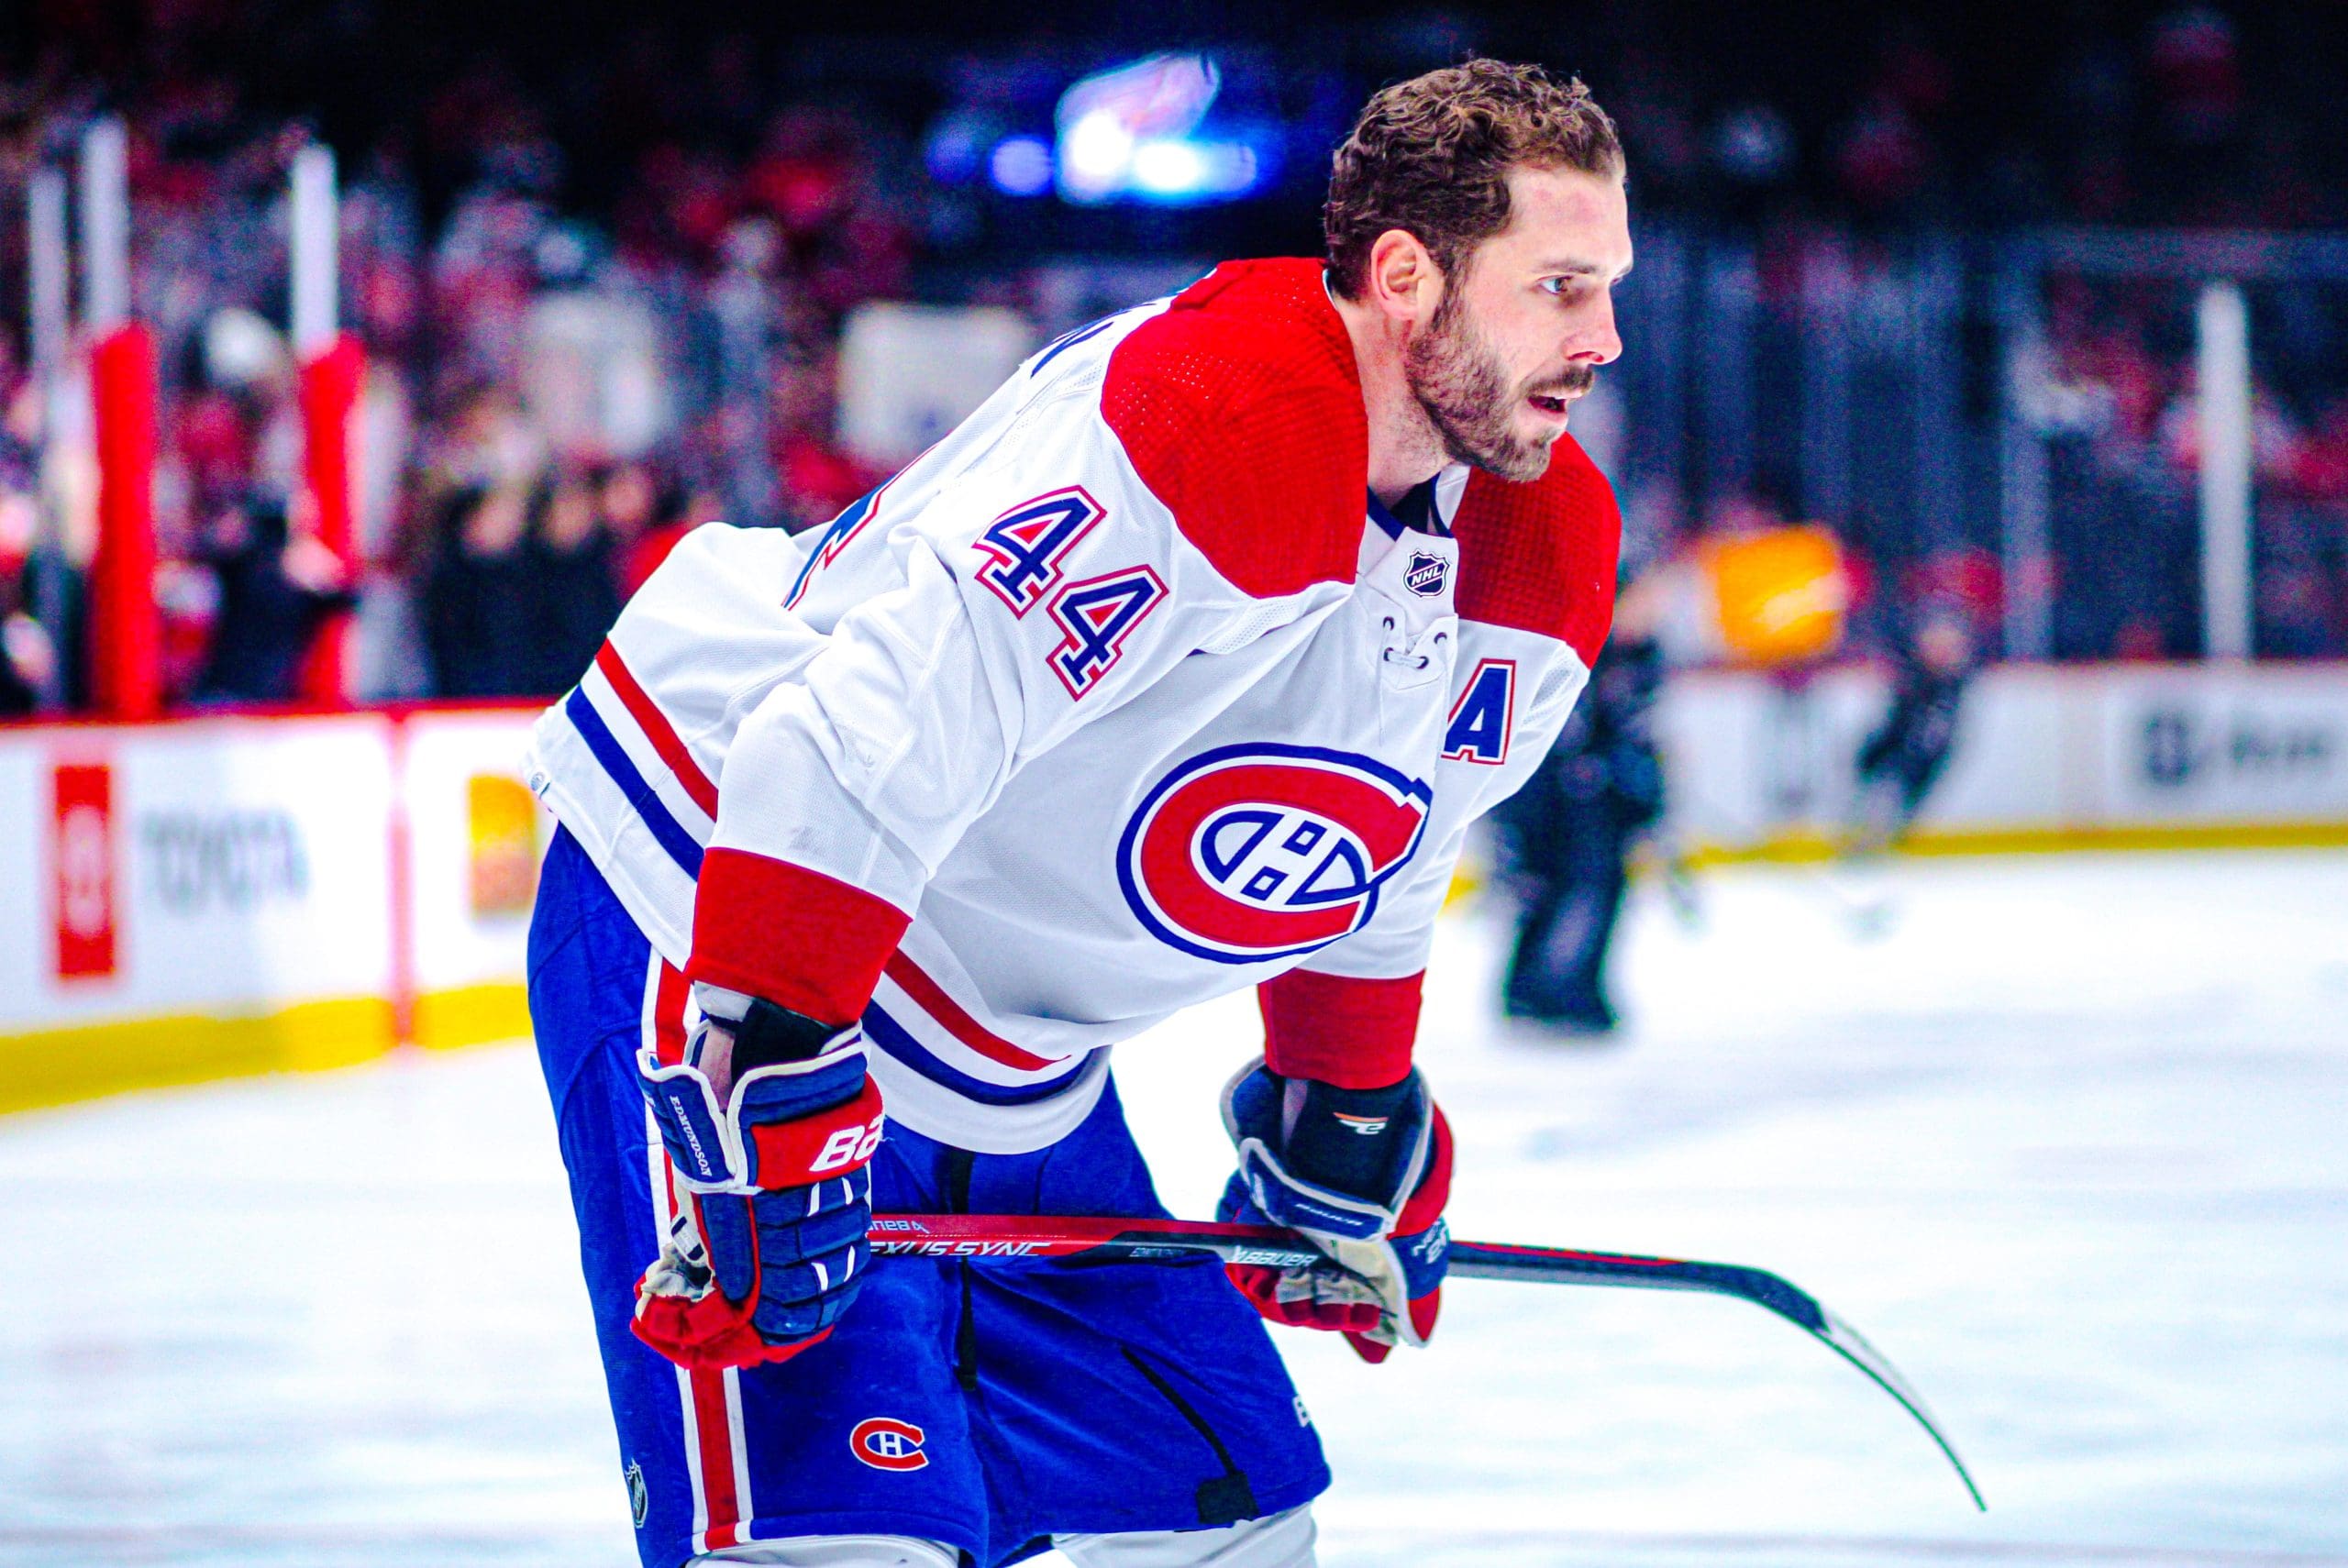 Montreal Canadiens GM Hughes Strikes Again! - Alex Newhook